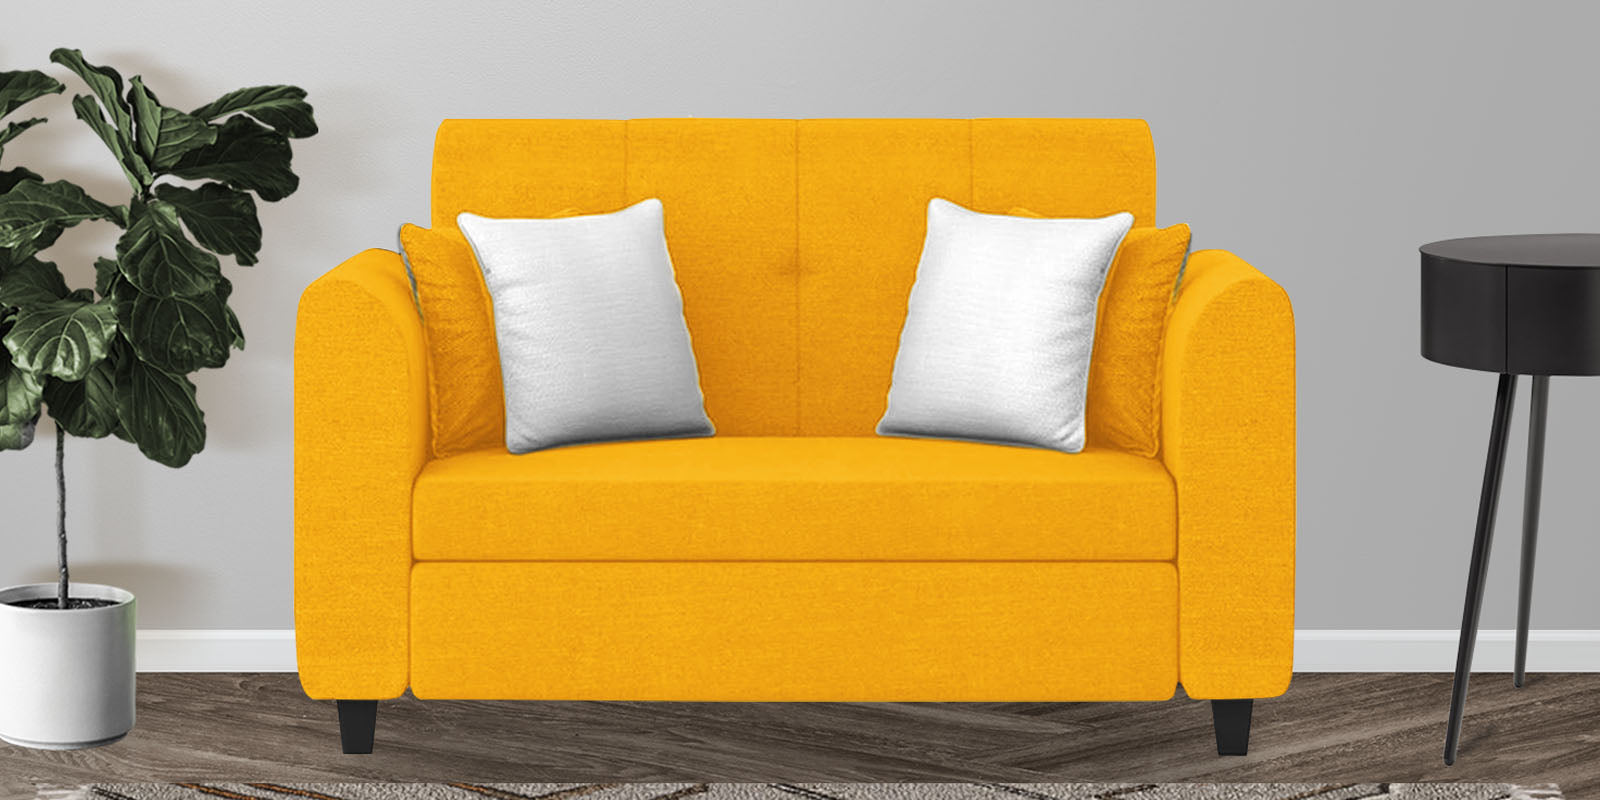 Denmark Fabric 2 Seater Sofa in Bold Yellow Colour